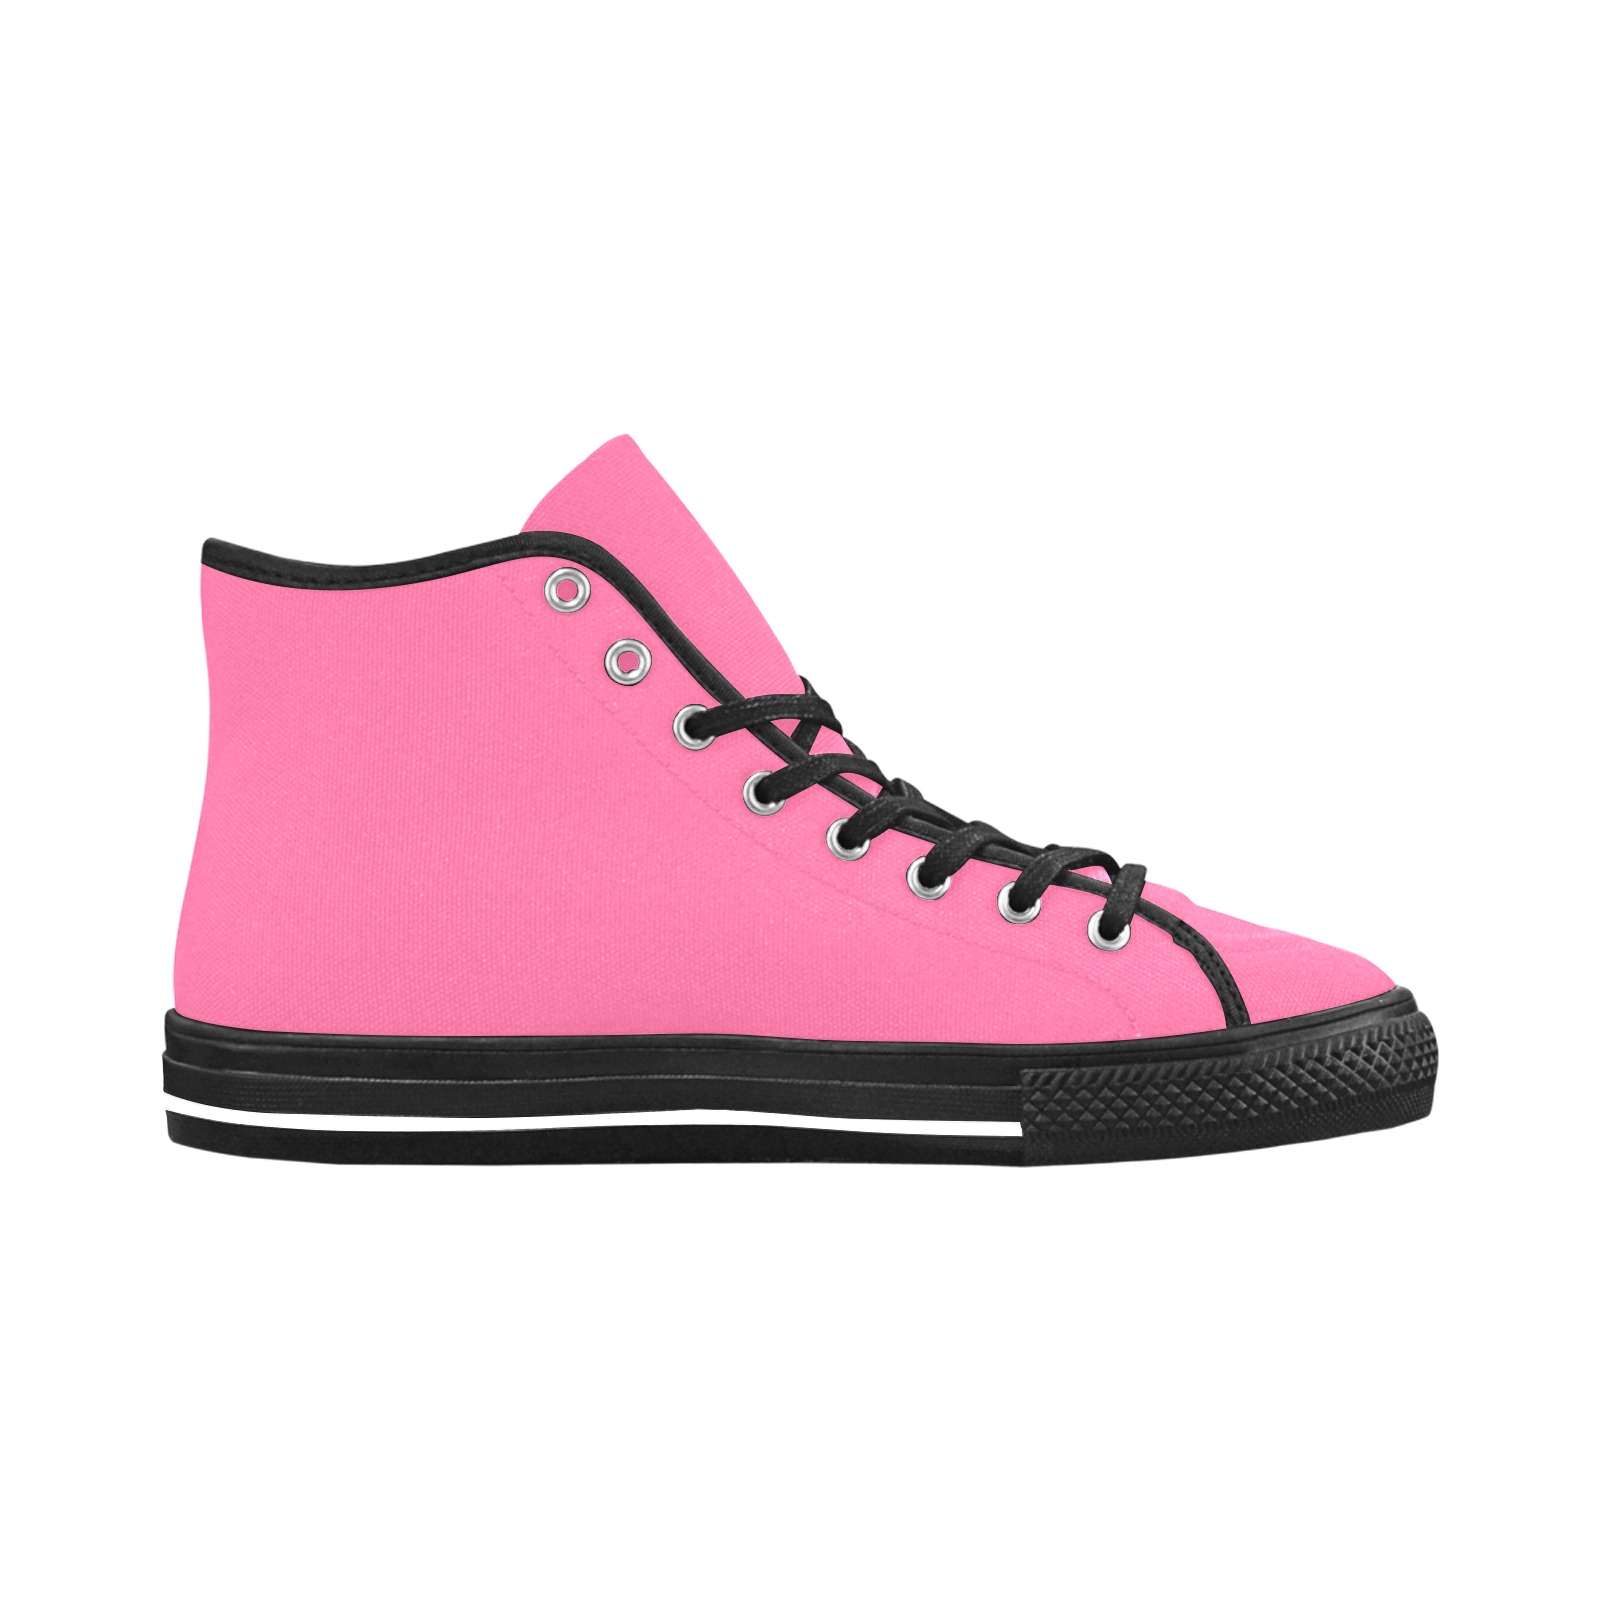 color French pink Vancouver H Men's Canvas Shoes (1013-1)